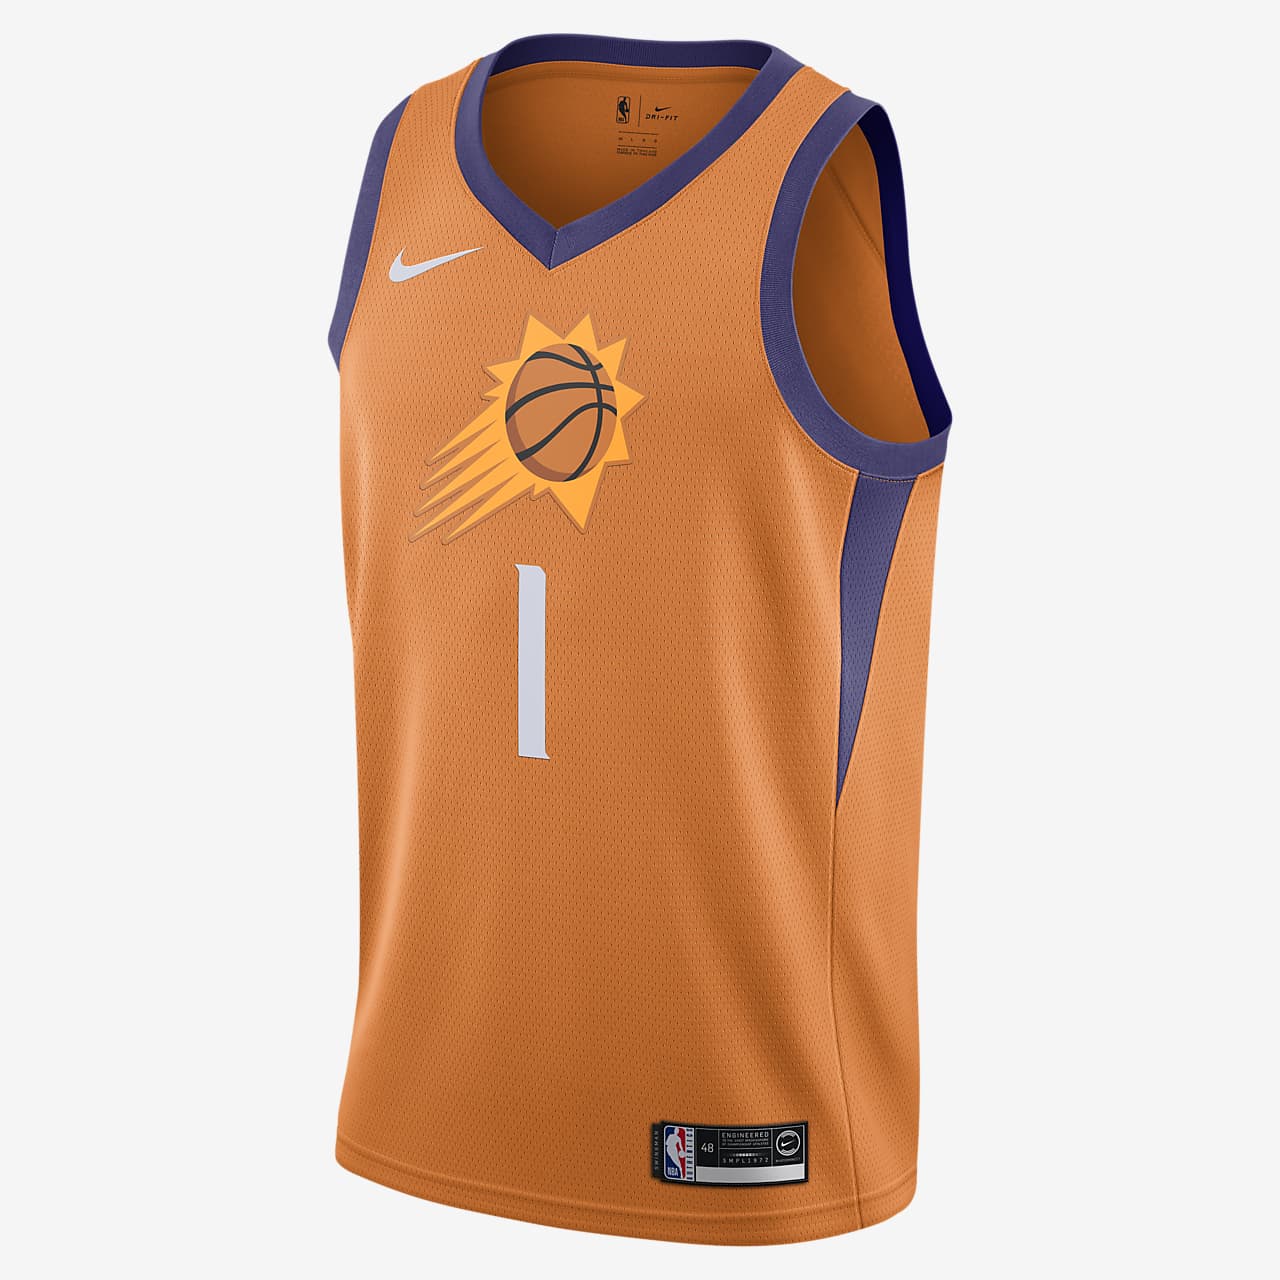 菲尼克斯太阳队 (Devin Booker) Icon Edition Nike NBA Jersey 男子球衣-耐克(Nike)中国官网